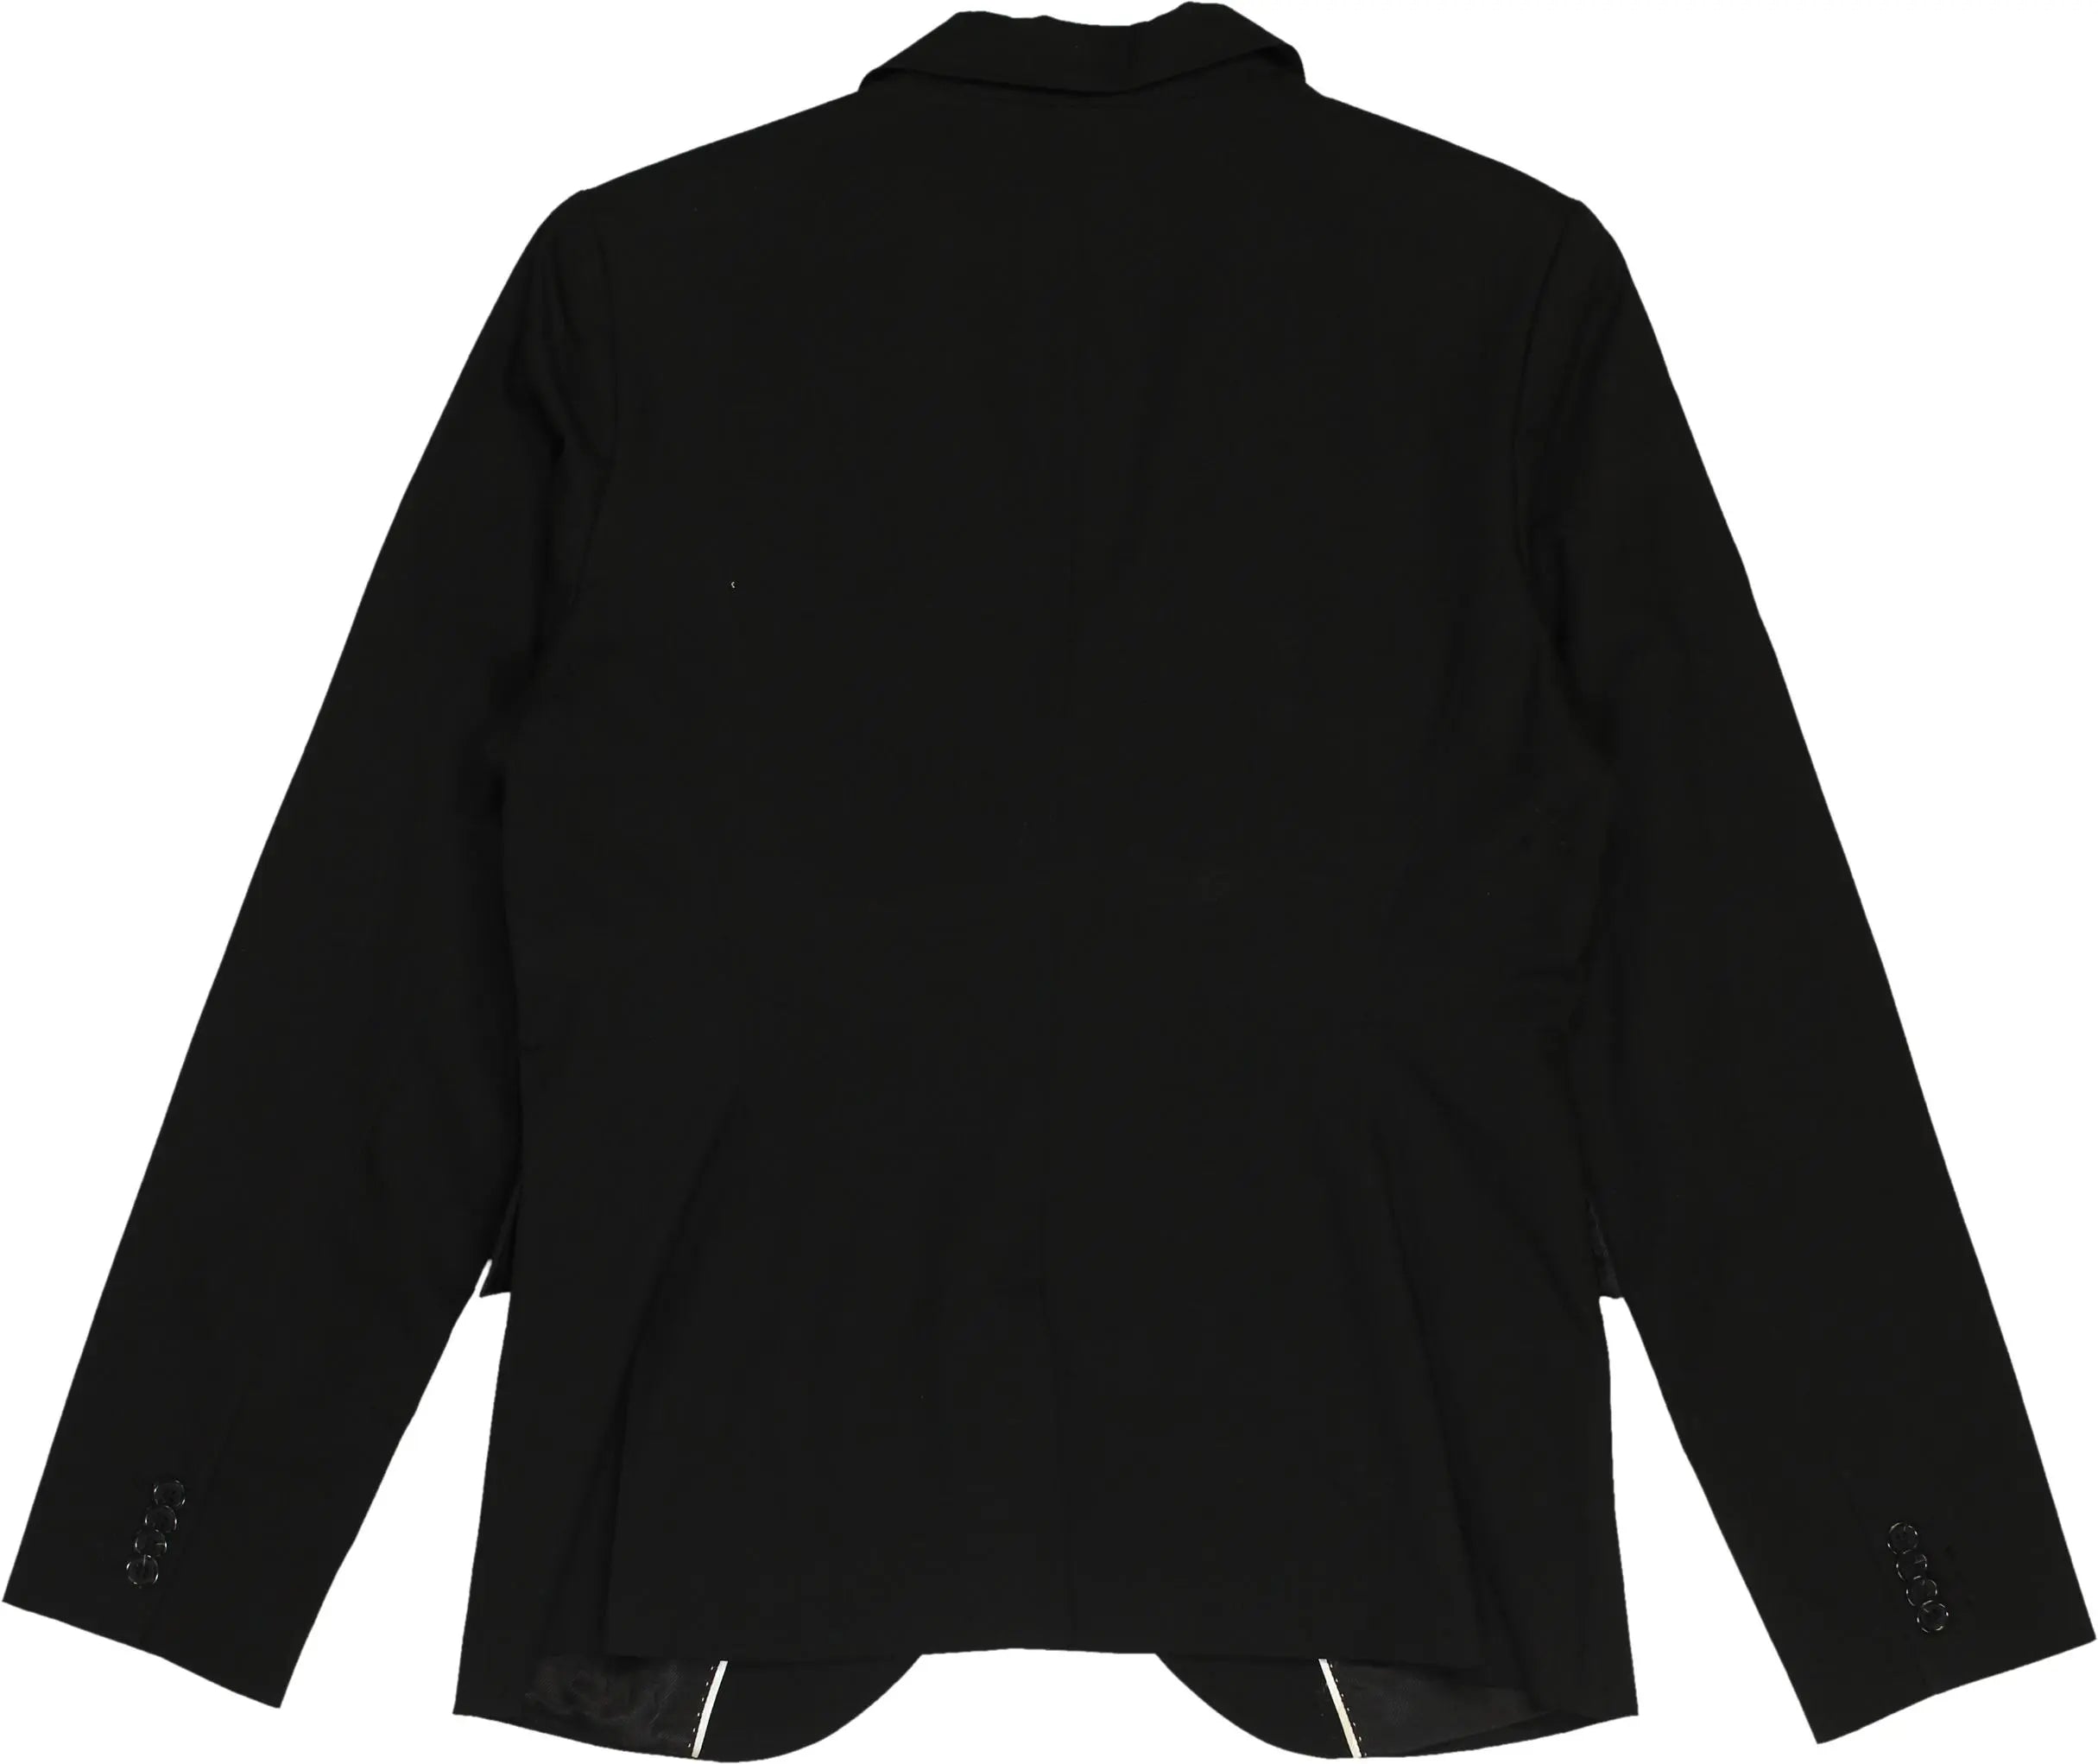 WE - Black blazer- ThriftTale.com - Vintage and second handclothing